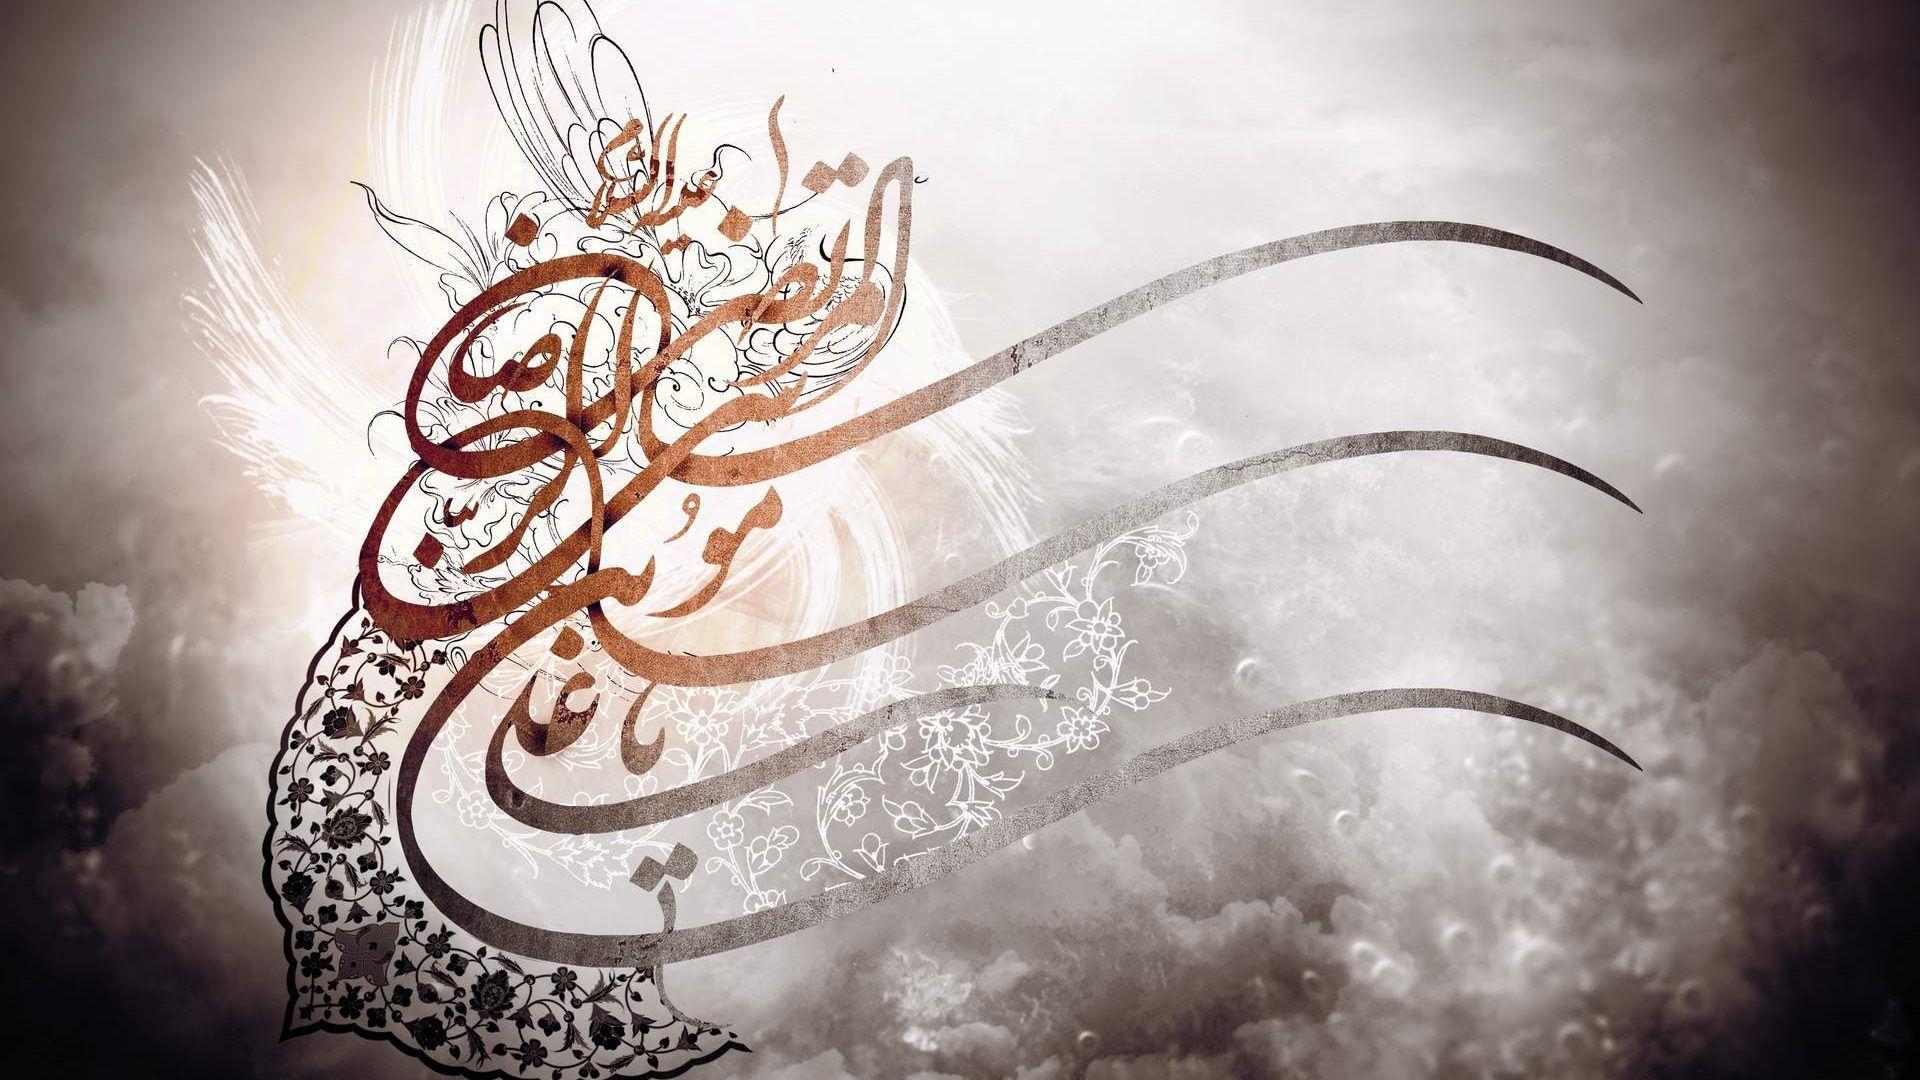 Download Calligraphy Art Arabic Wallpaper for desktop, mobile phones